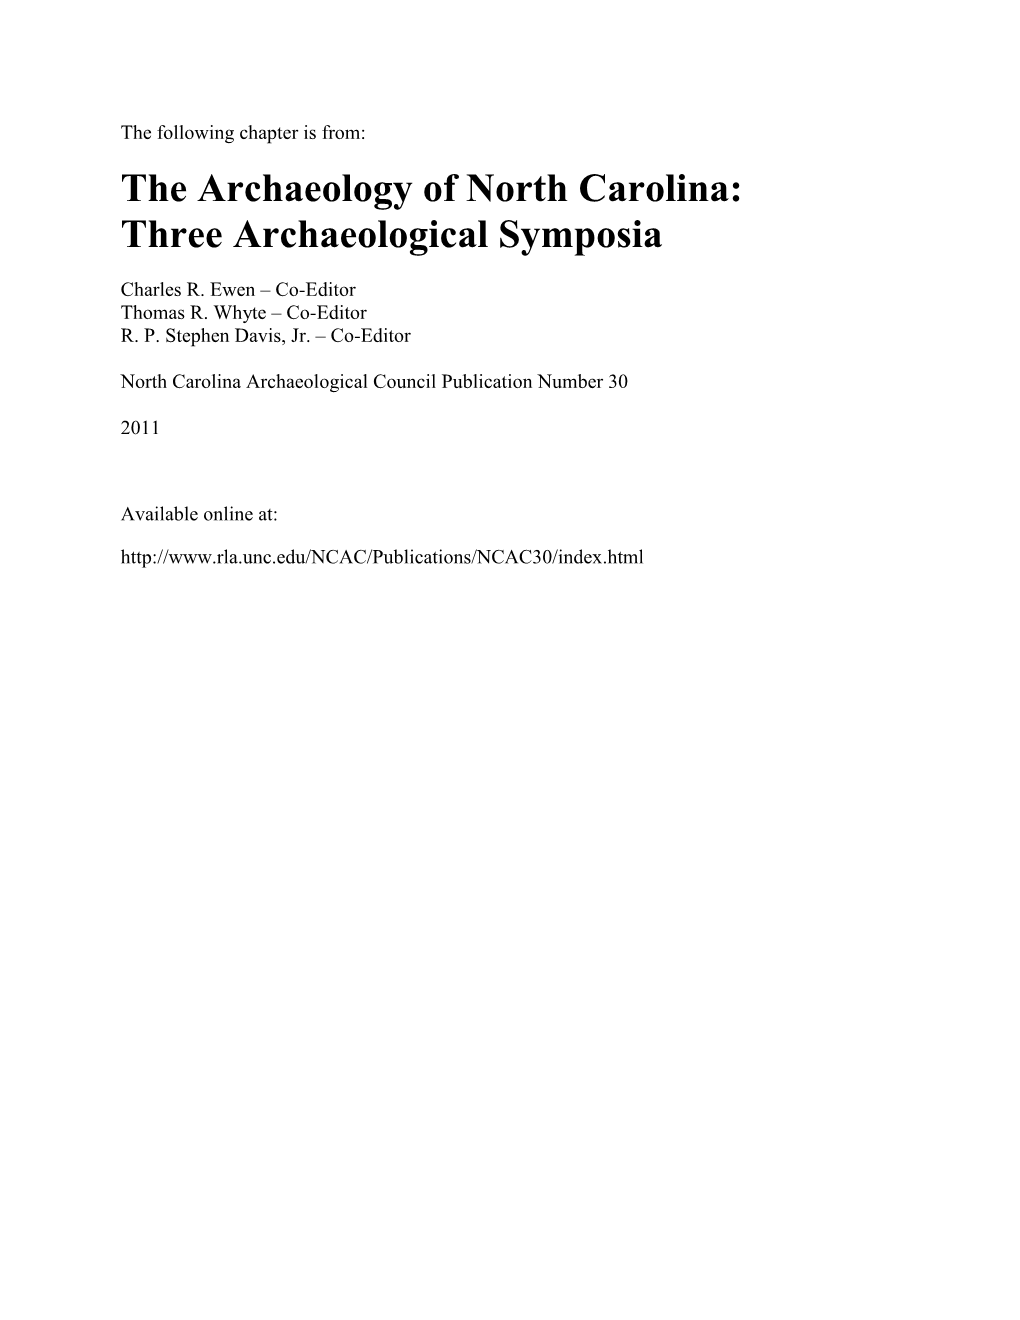 Woodland Sites and Ceramics of Coastal North Carolina